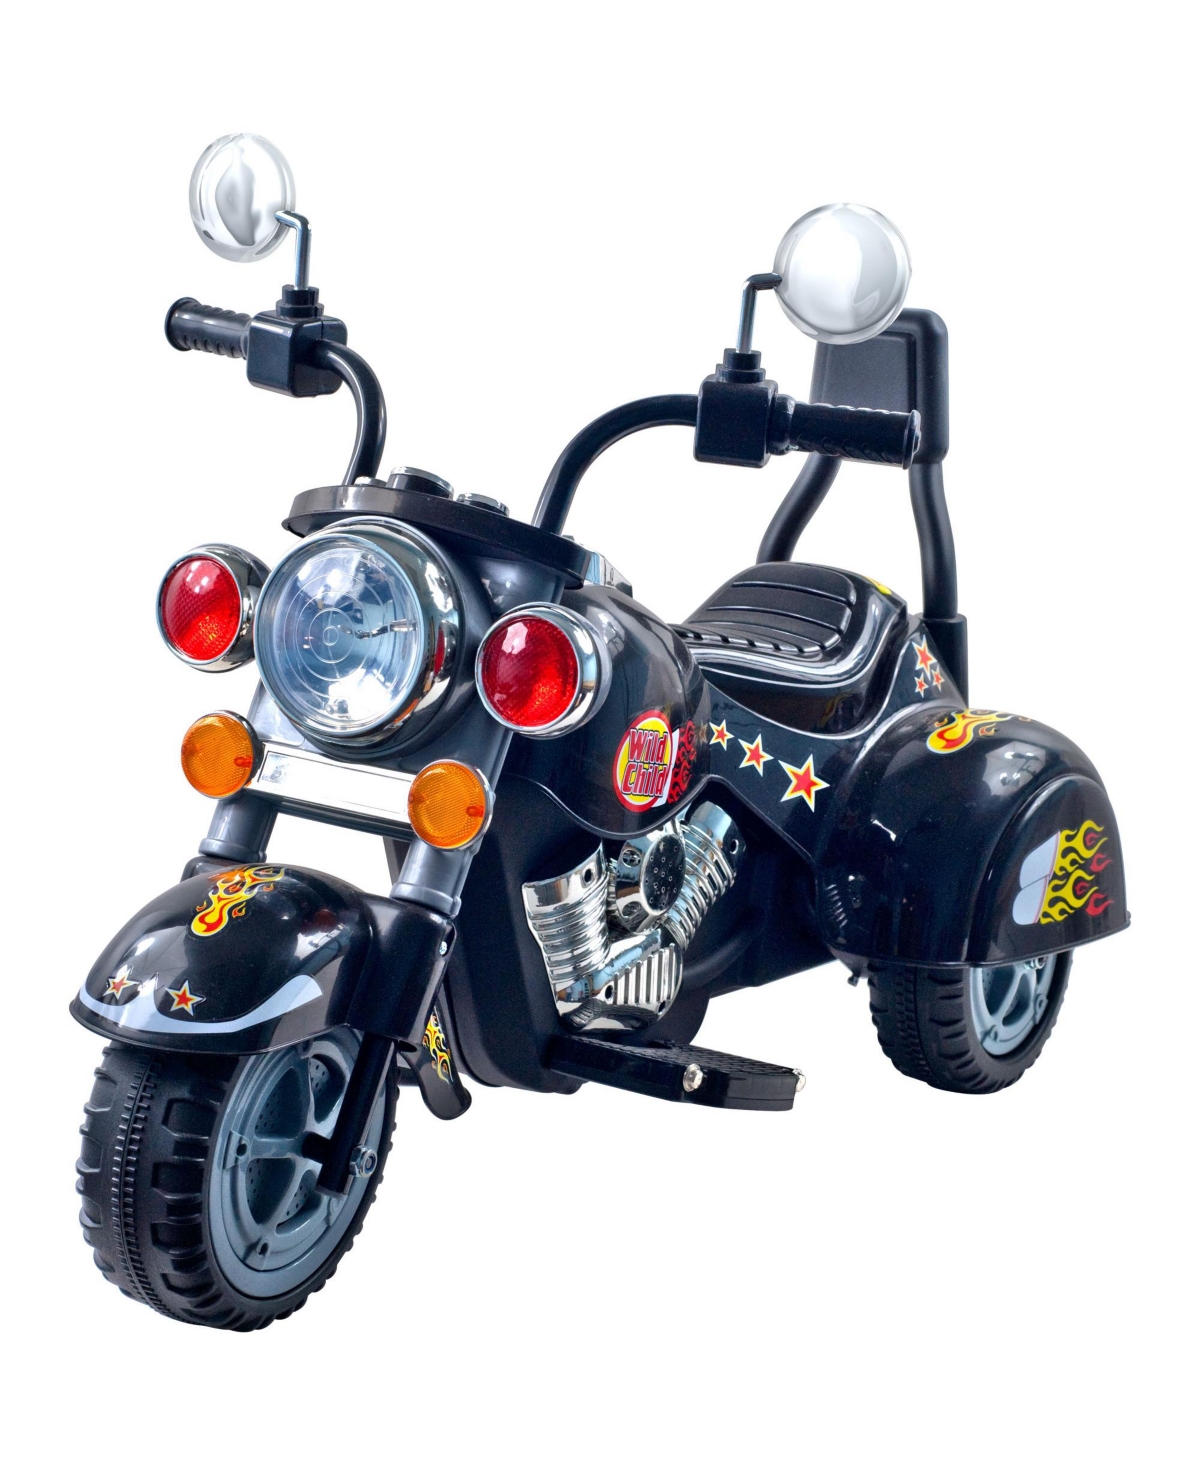 Lil' Rider 3 Wheel Trike Chopper Motorcycle In Black